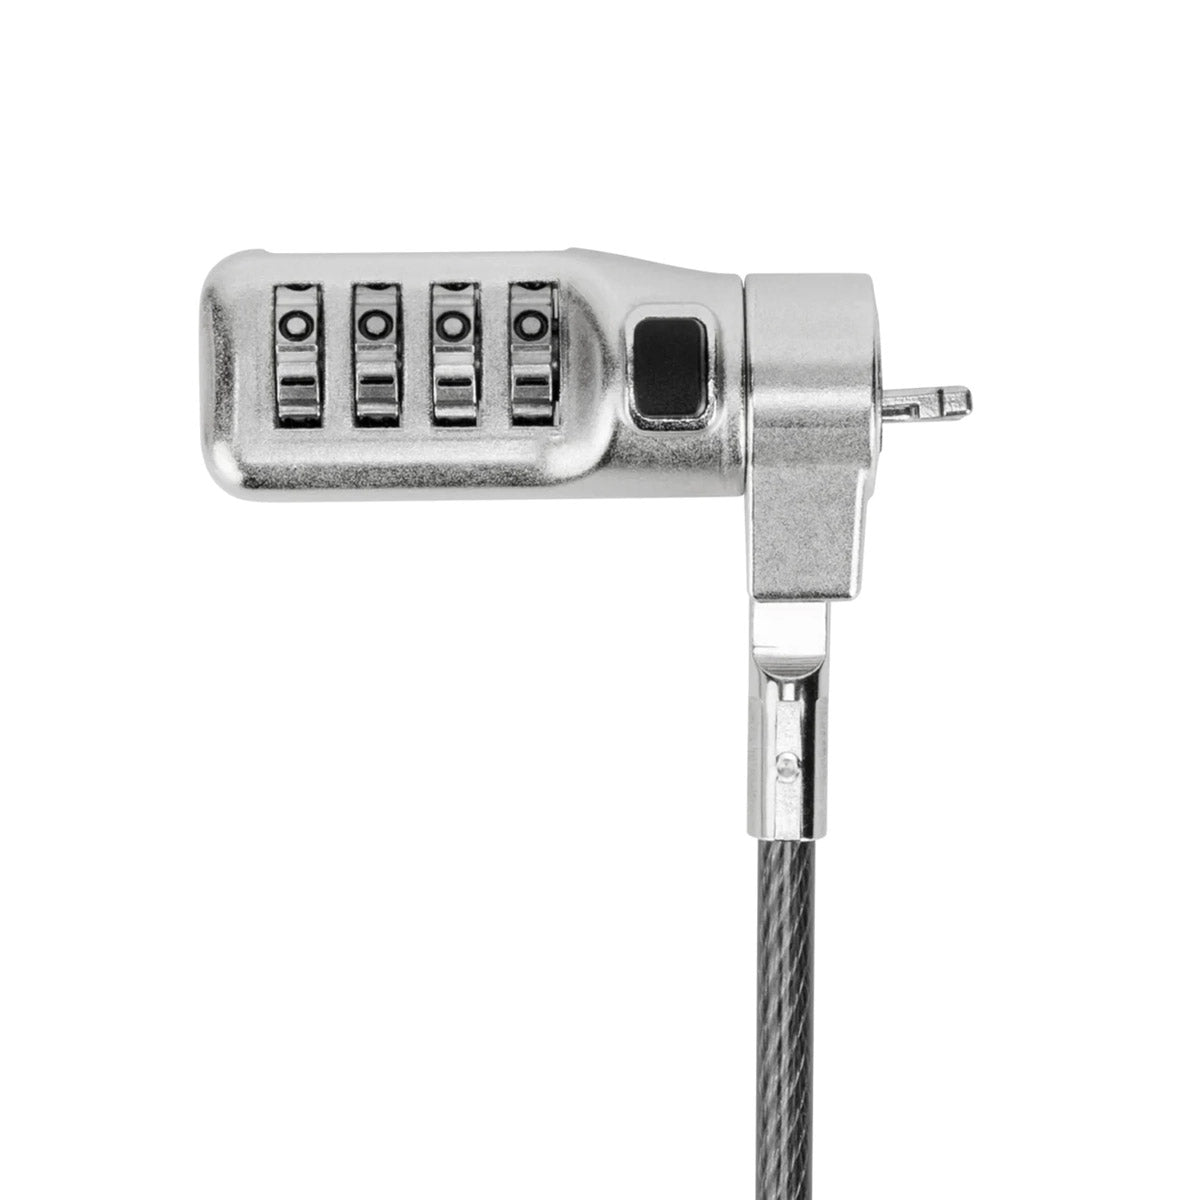 Targus ASP71GLX-S DEFCON® Compact Slot Serialized Combo Cable Lock 手提電腦防盜鎖